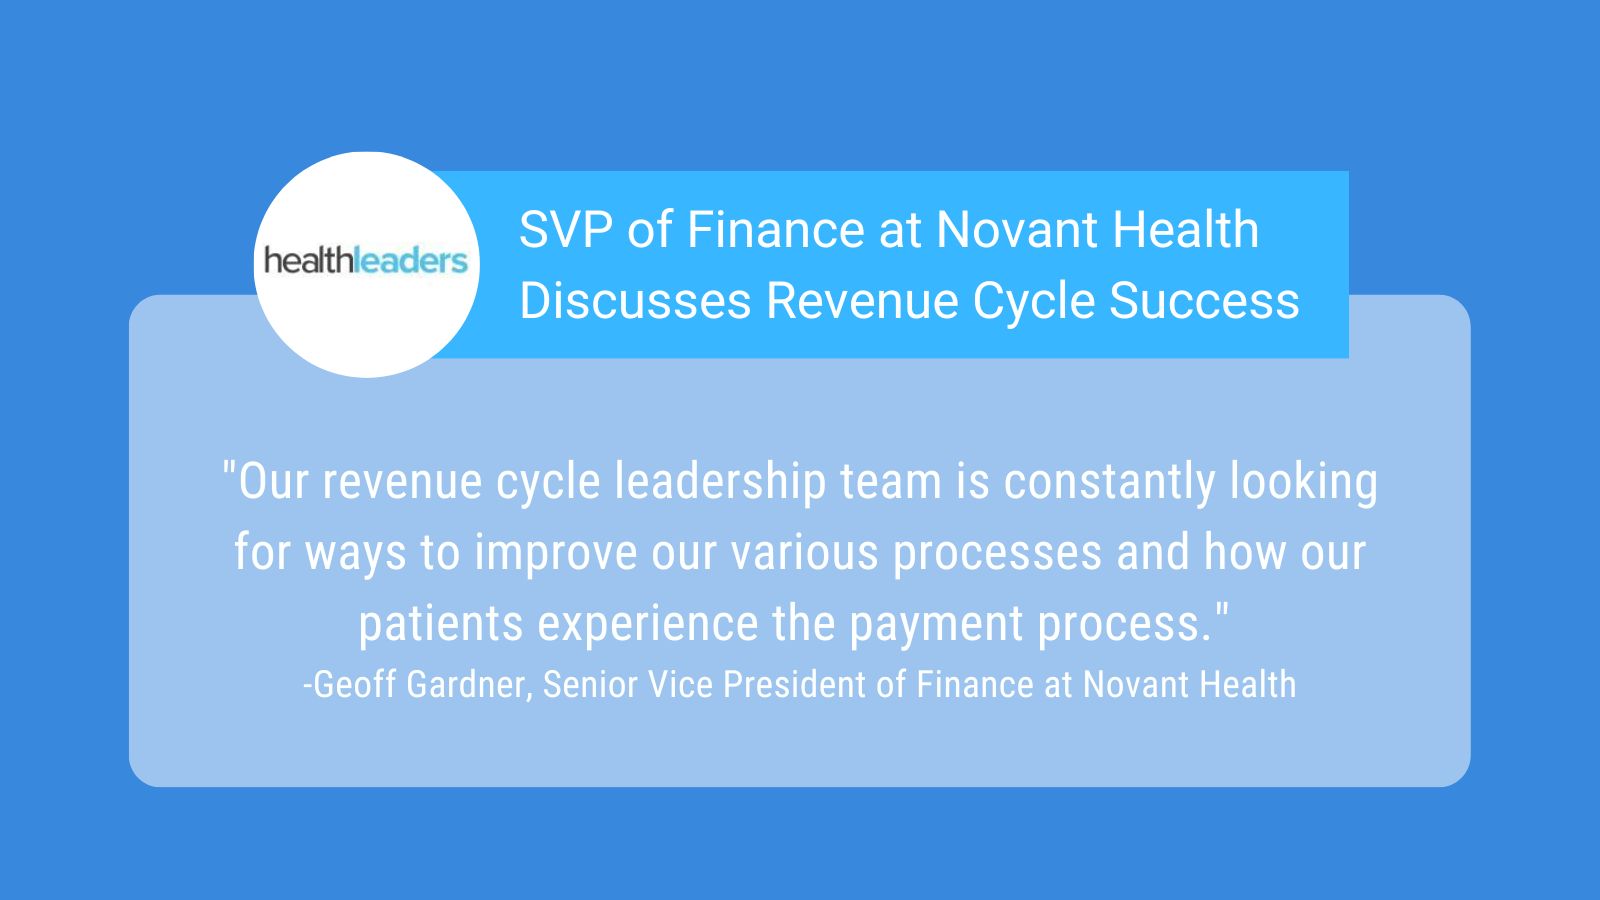 Q&A: SVP of Finance at Novant Health Discusses Revenue Cycle Success